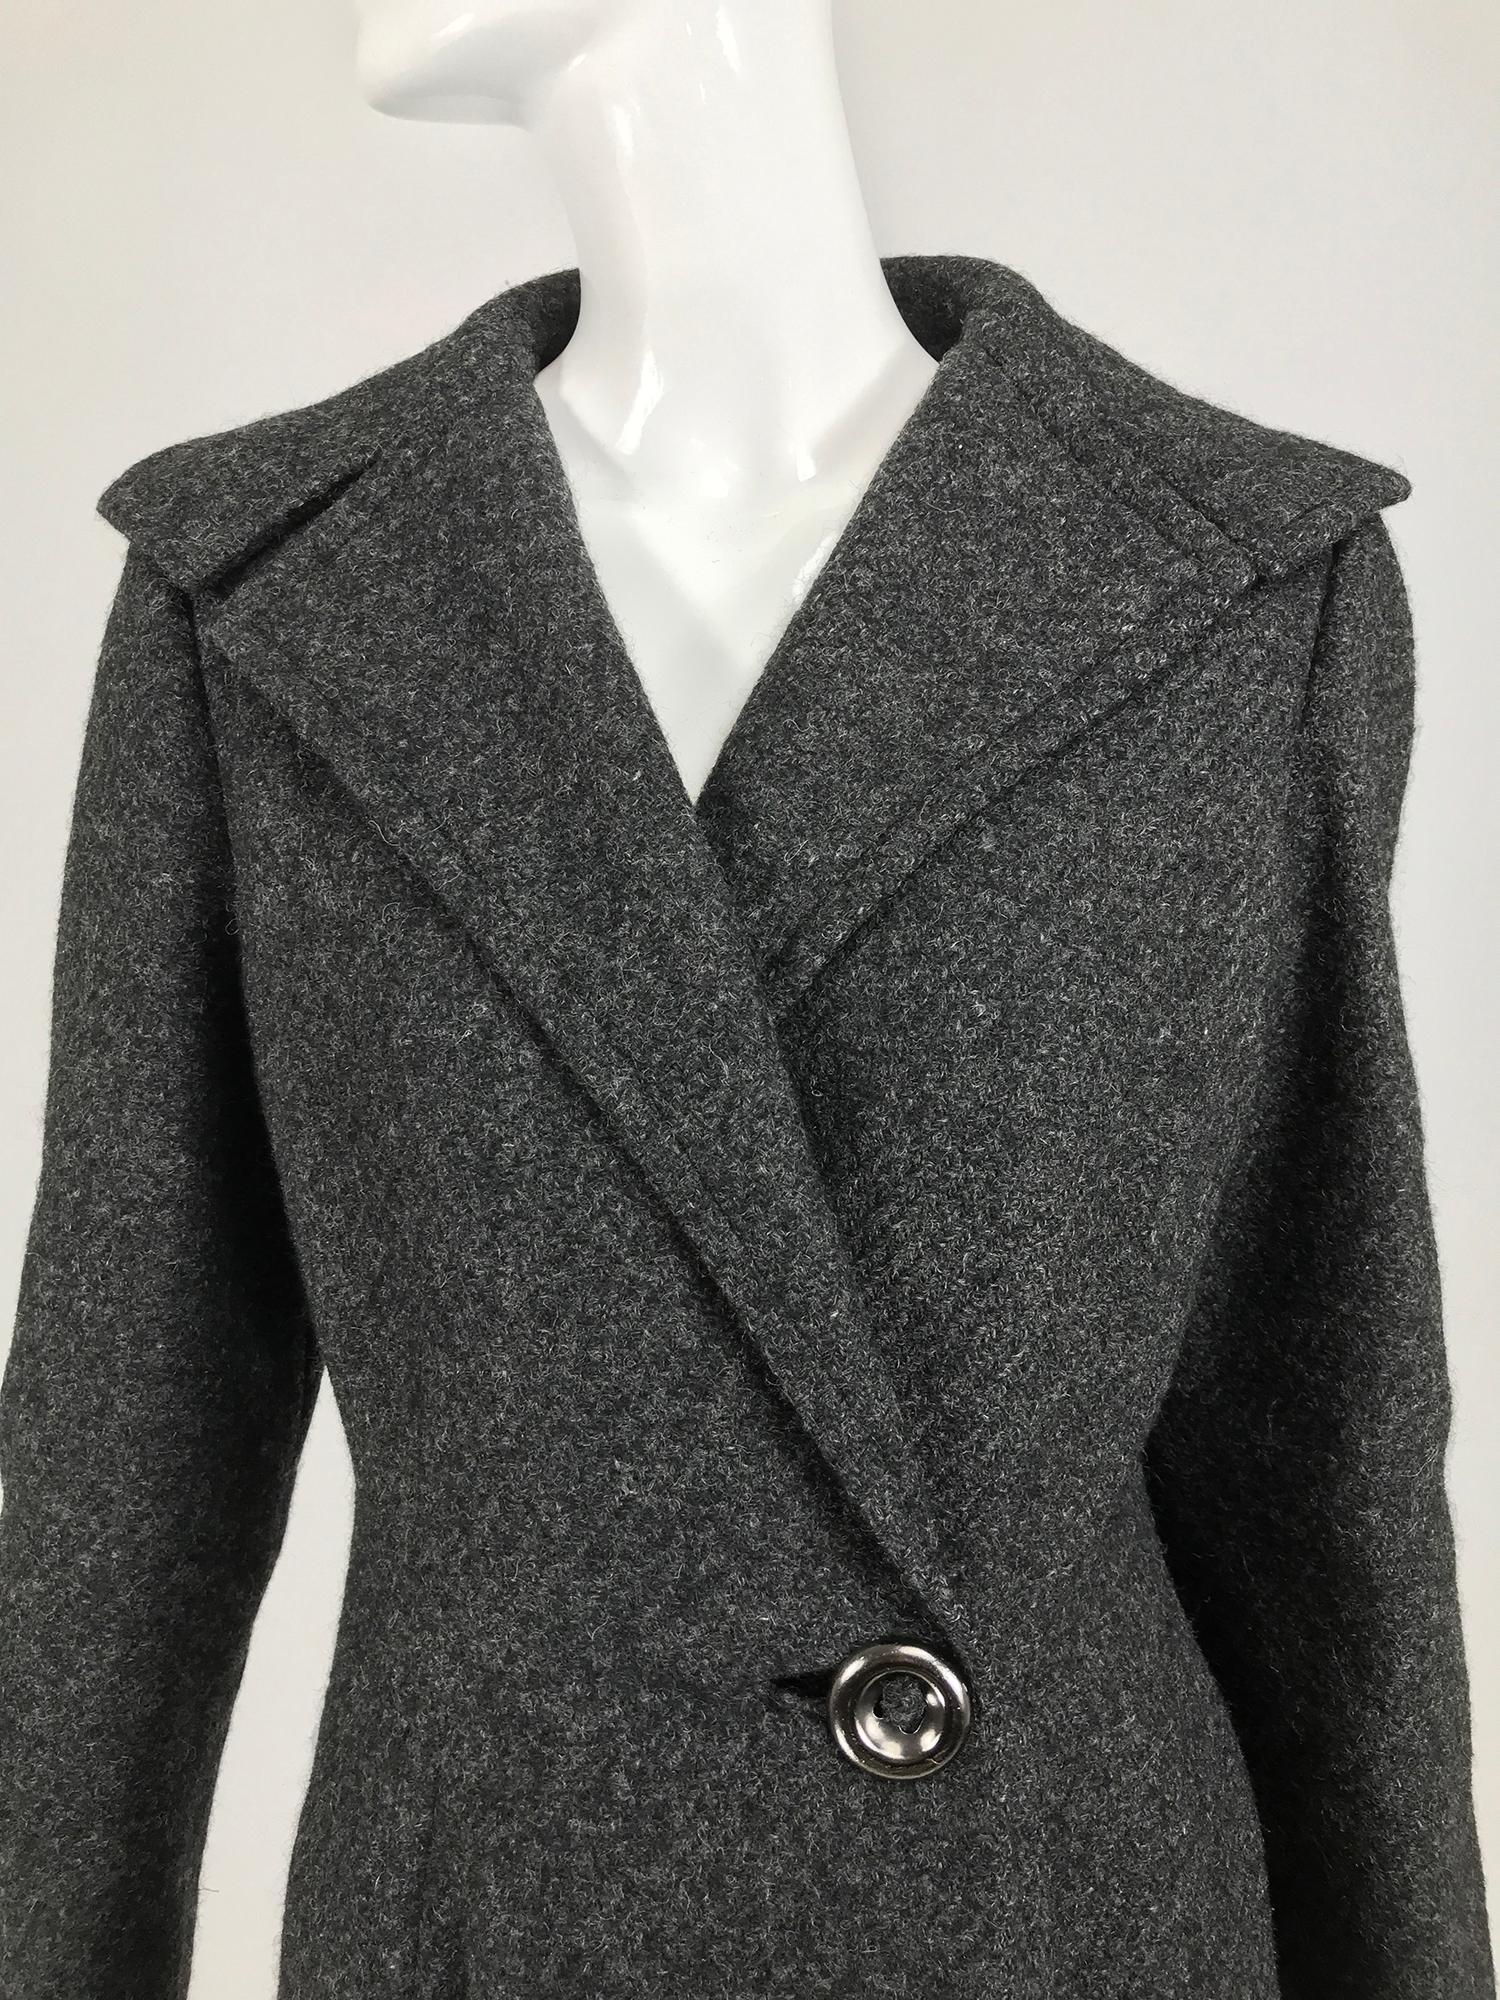 Pauline Trigere Grey Flecked Wool Princess Coat 1950s For Sale 2